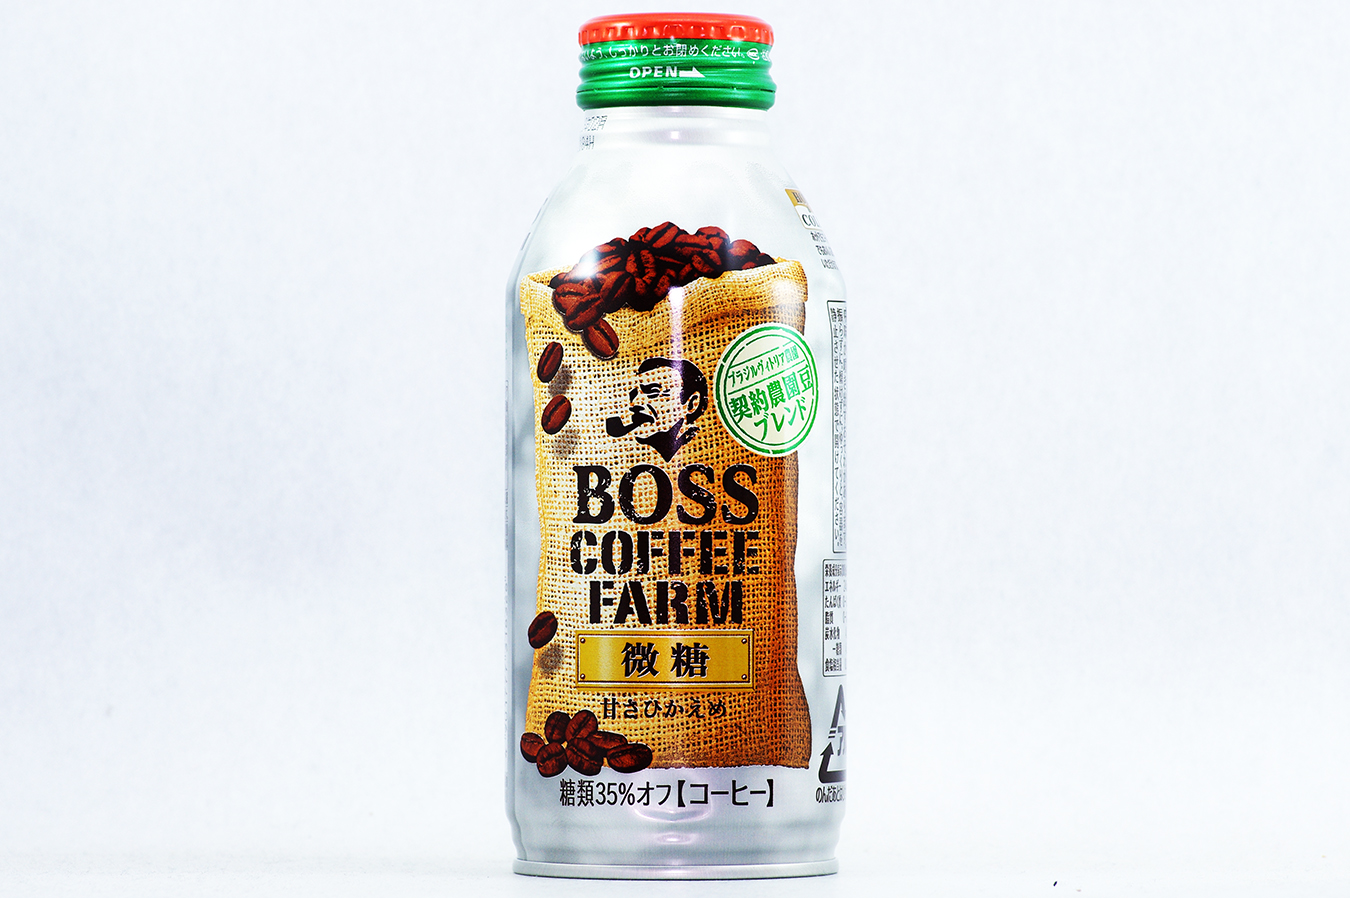 BOSS COFFEE FARM 微糖 契約農園豆ブレンド 2018年3月